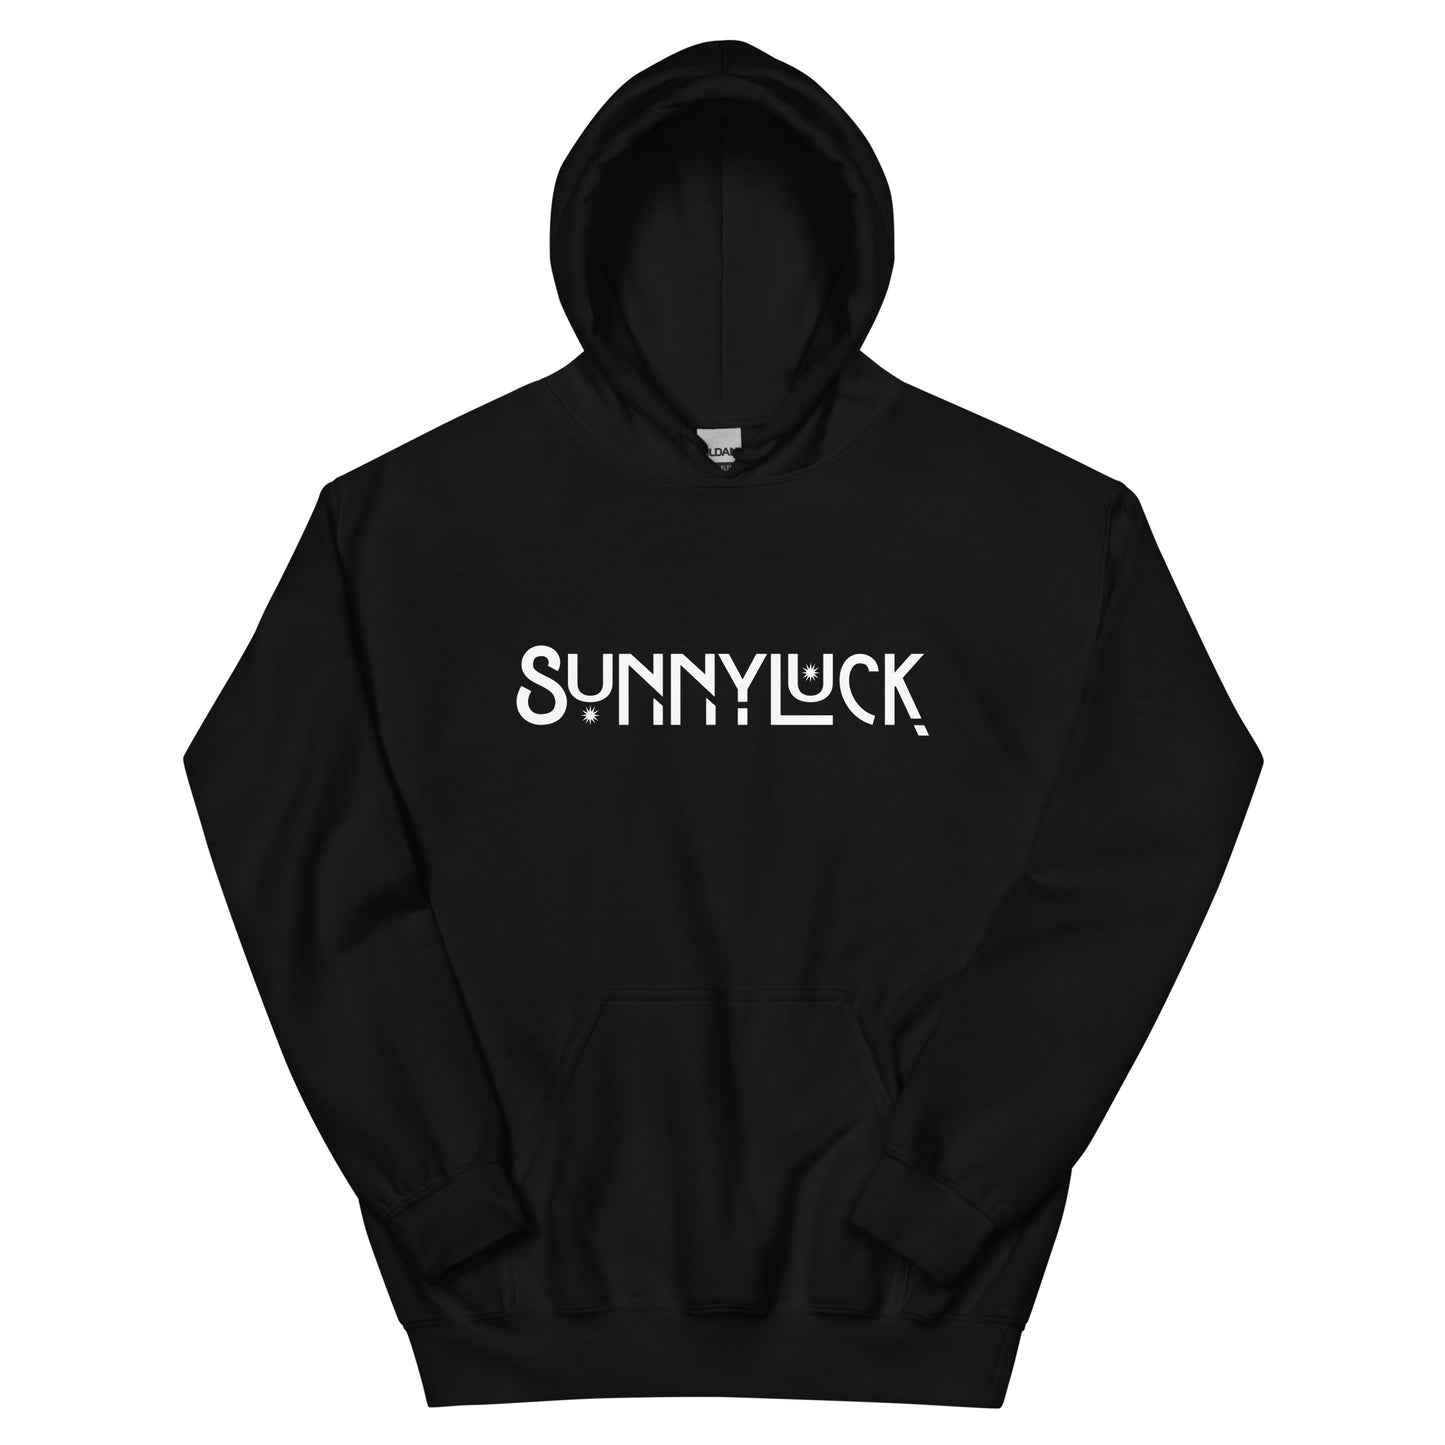 The SunnyLuck Hoodie